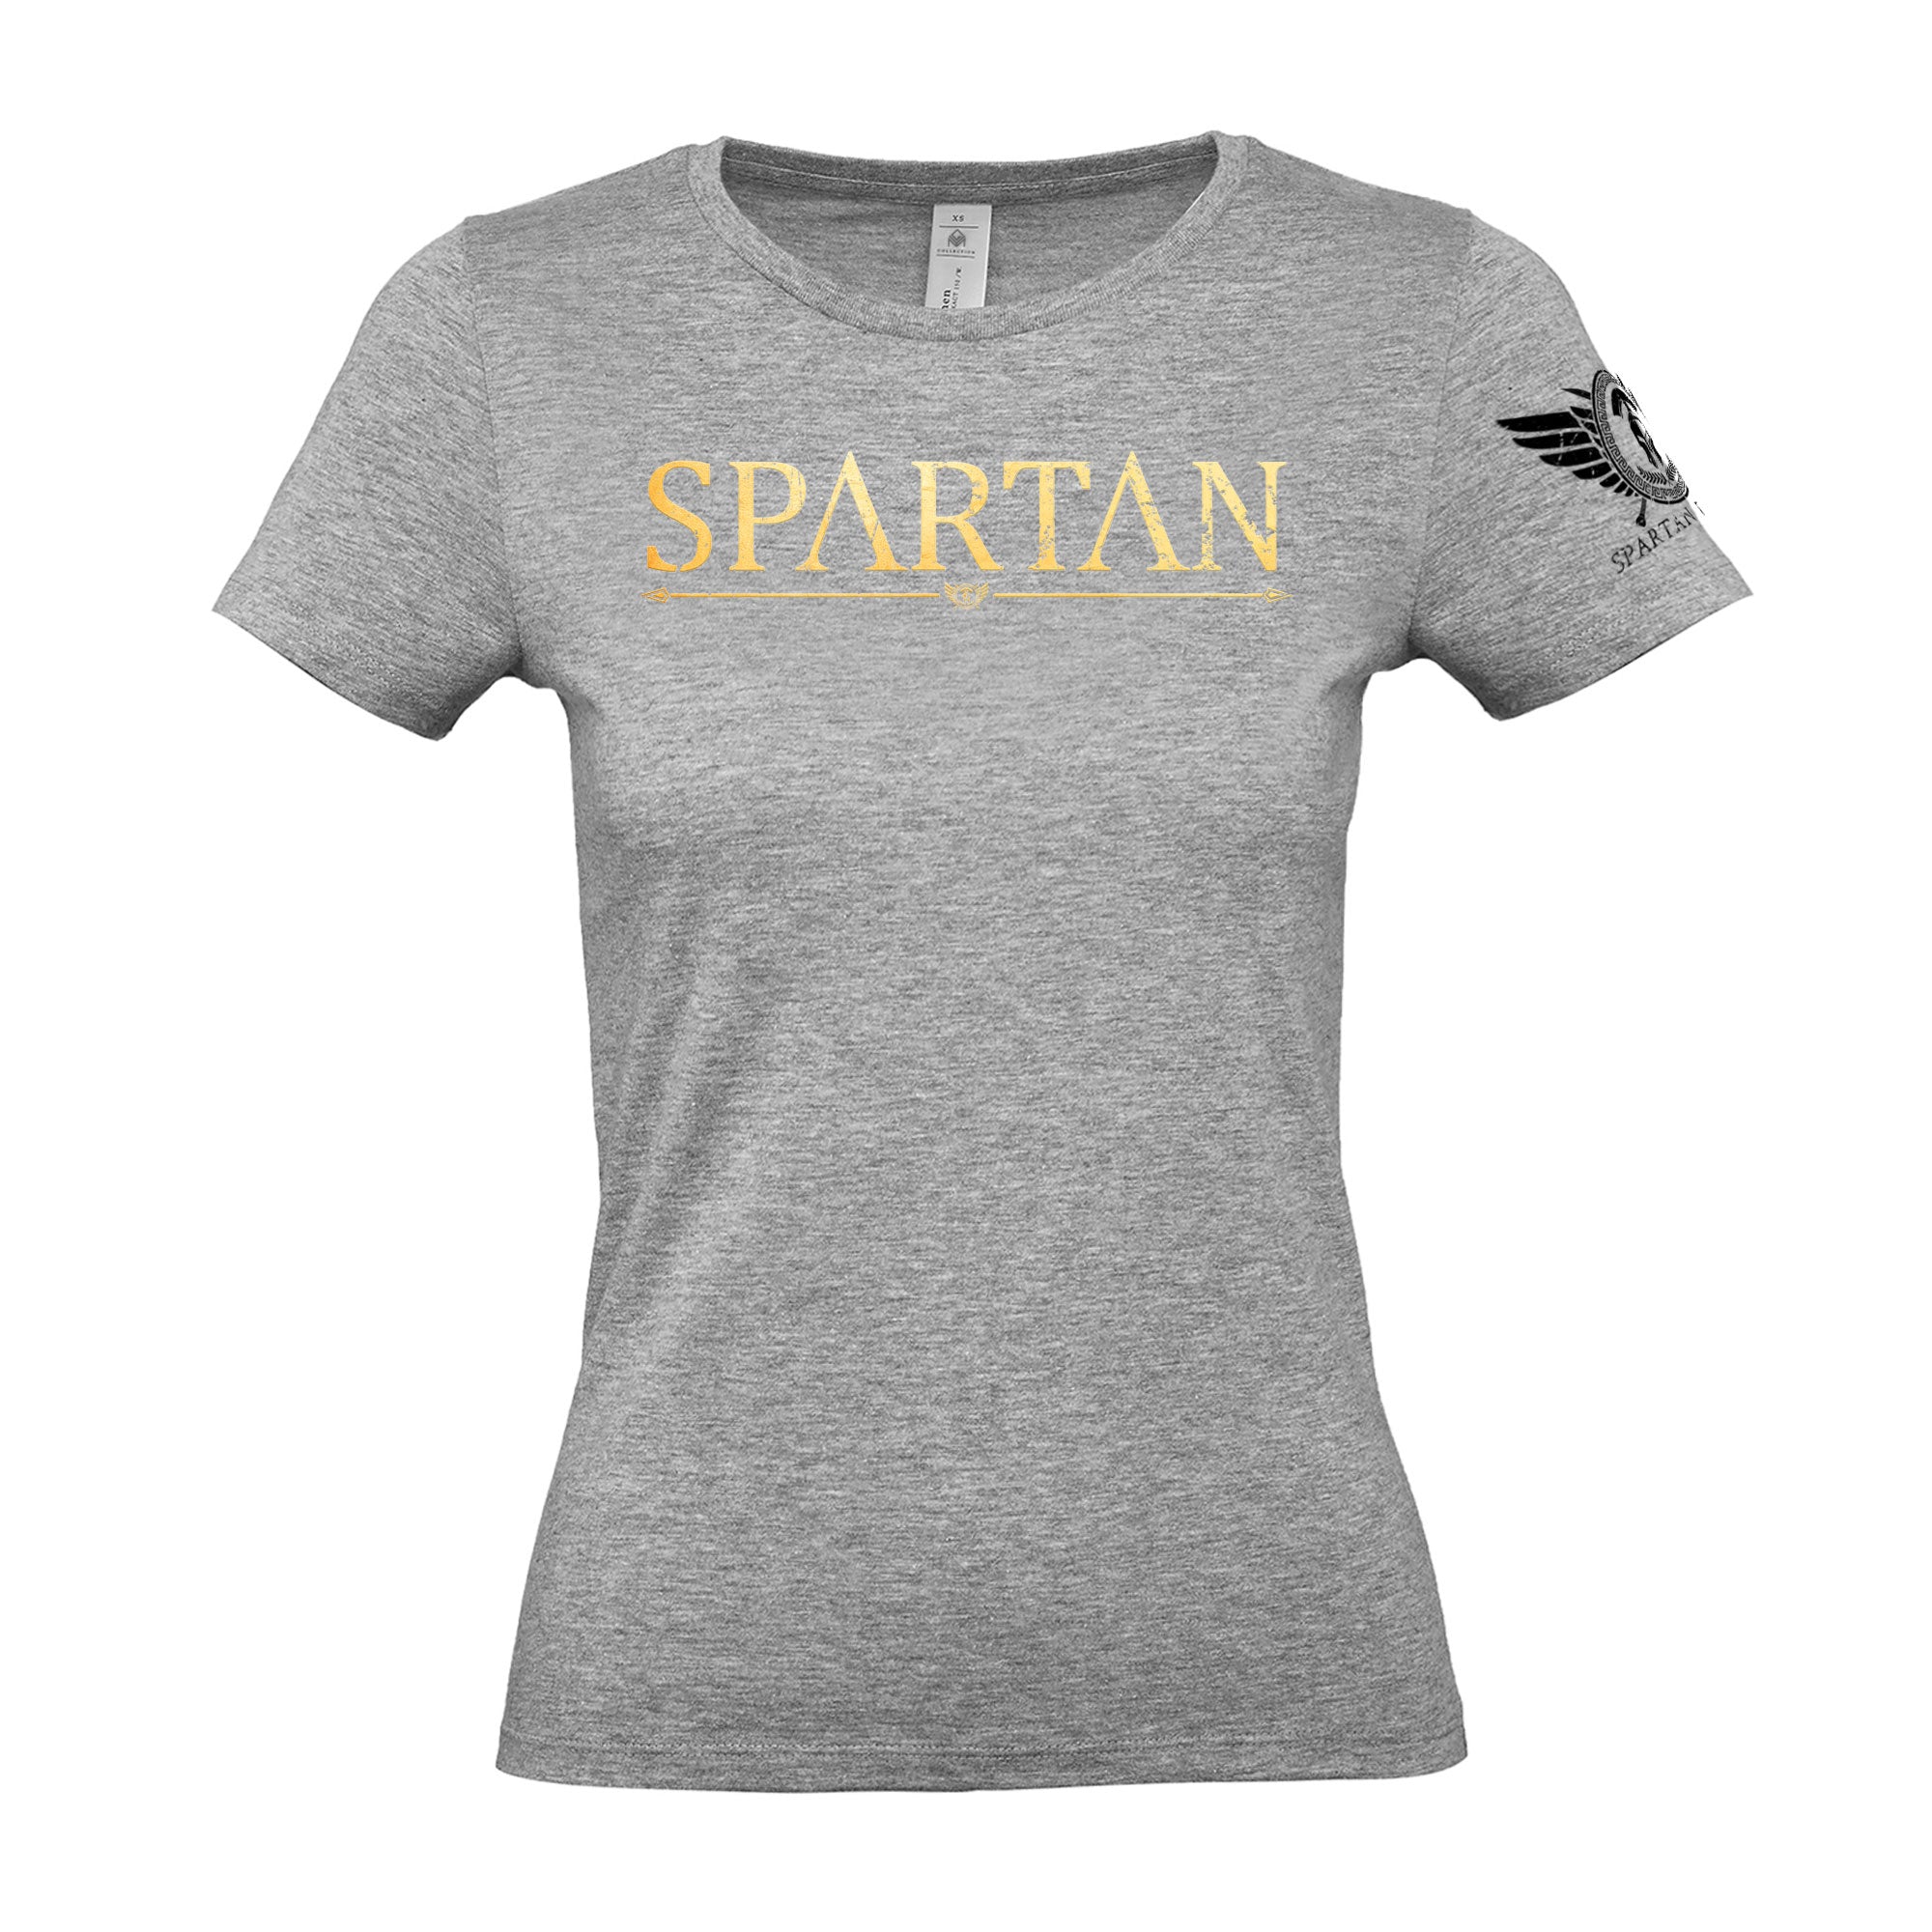 Spartan Forged Spartan Gold - Women's Gym T-Shirt